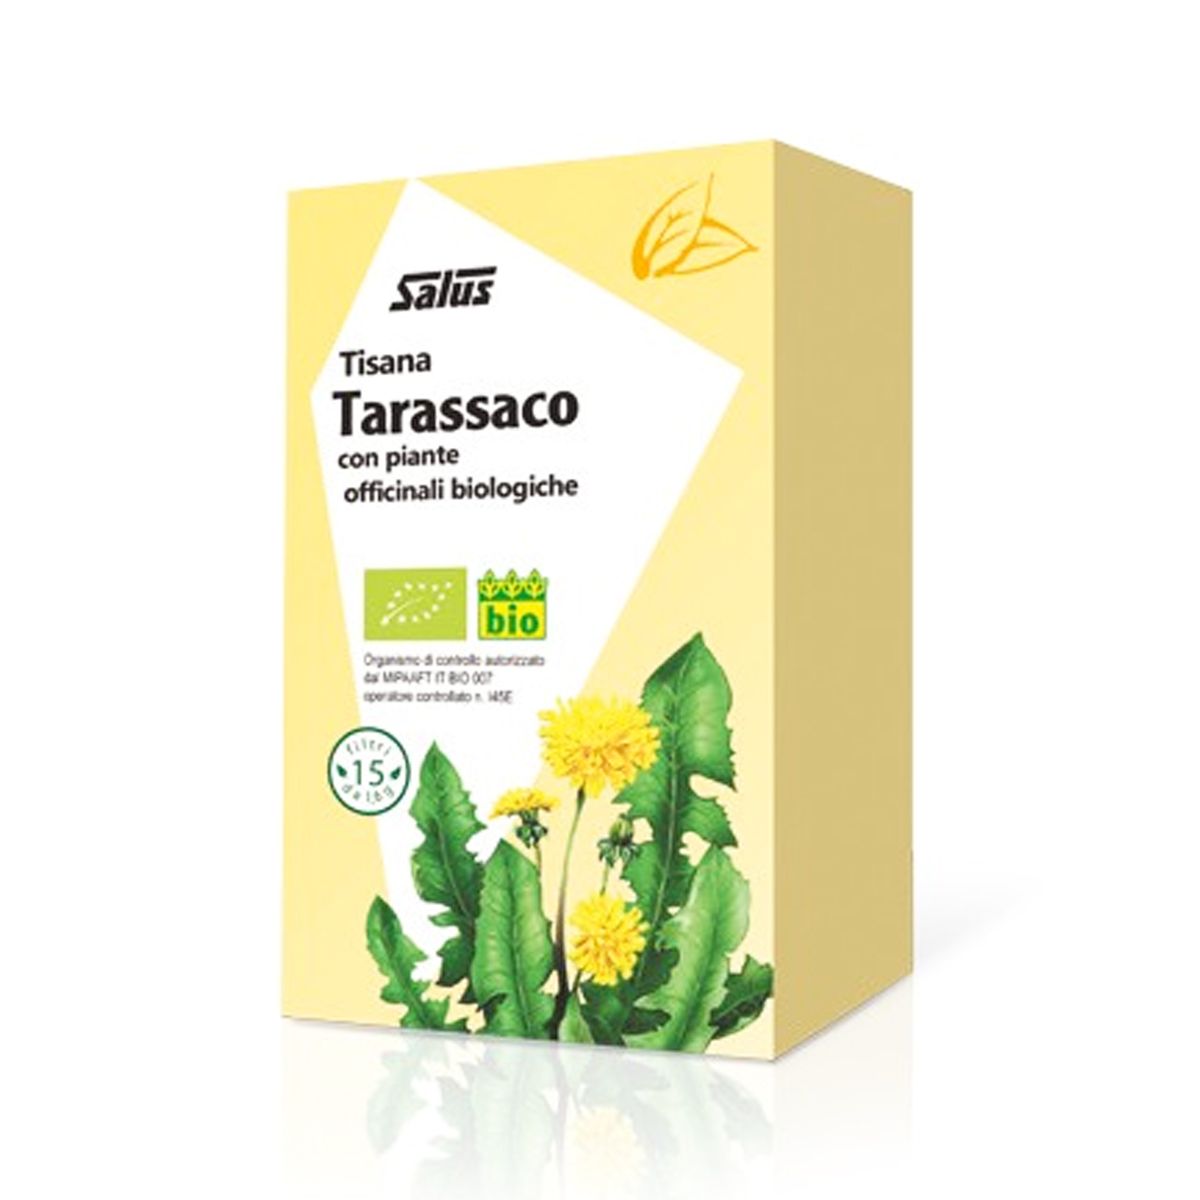 Salus Haus Tarassaco Tisana Digestiva 15 Filtri Bio